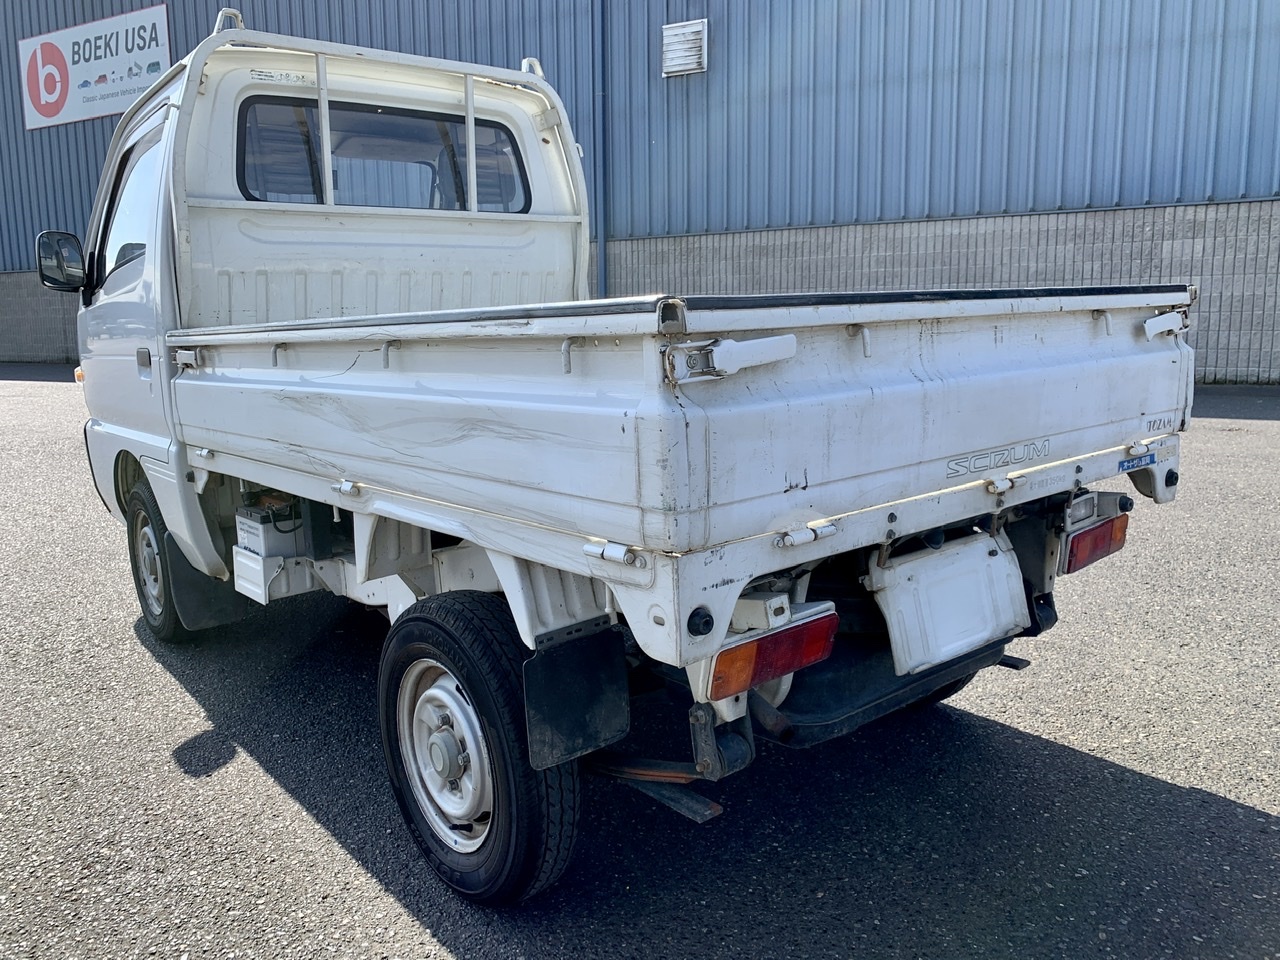 Boeki USA | Used 1993 White Mazda Scrum Soft Dump For Sale In Vancouver, WA 98660